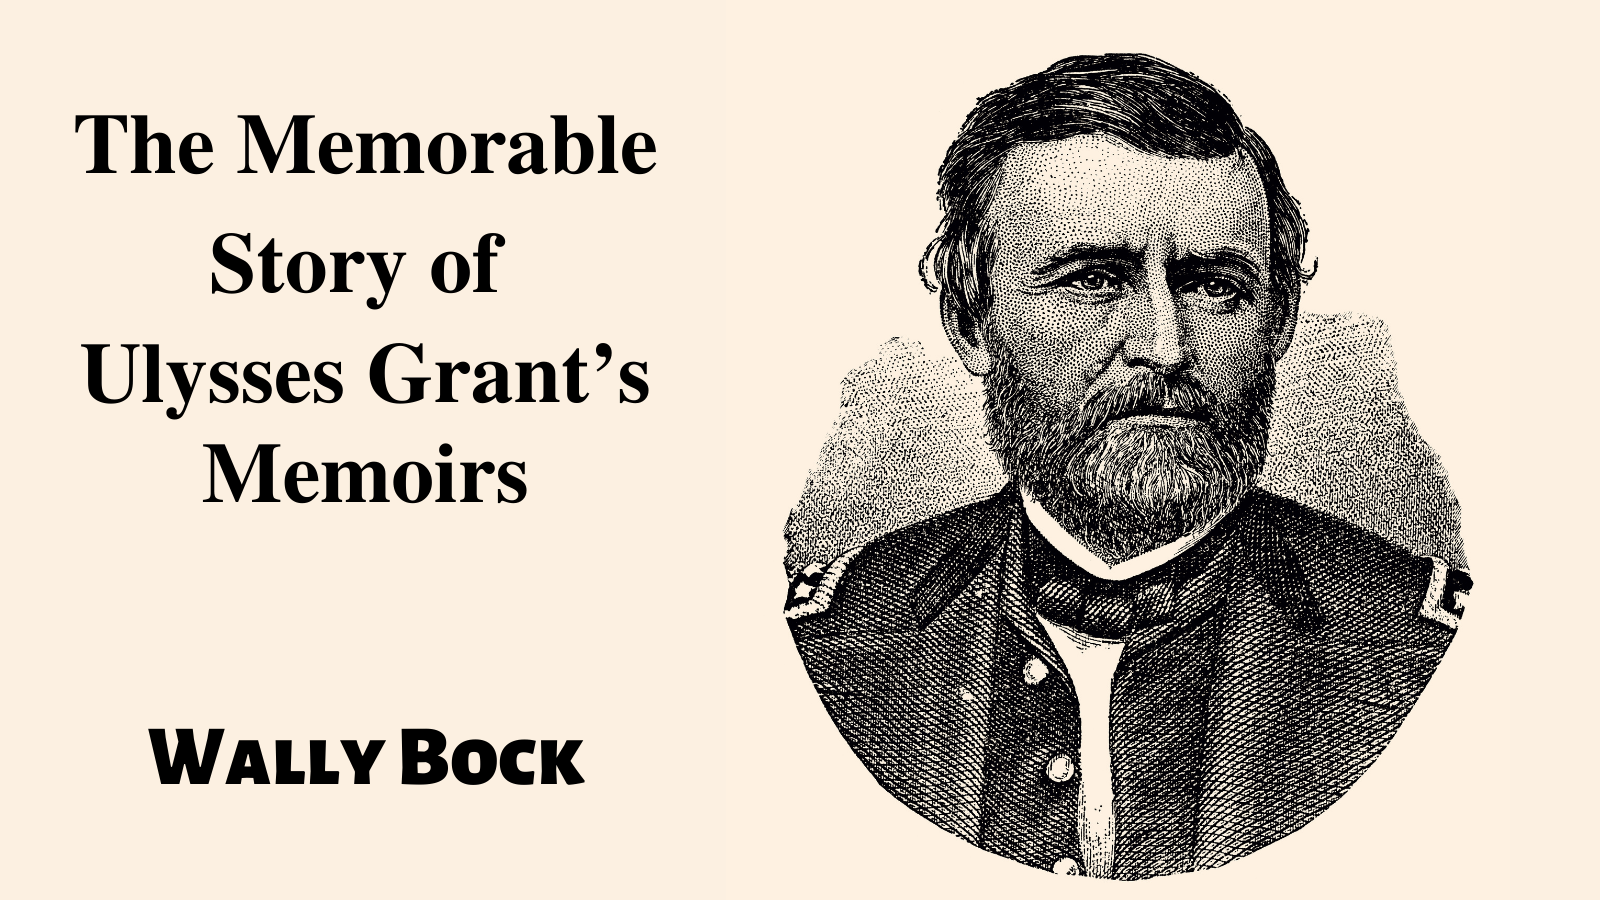 The Memorable Story of Ulysses Grant’s Memoirs